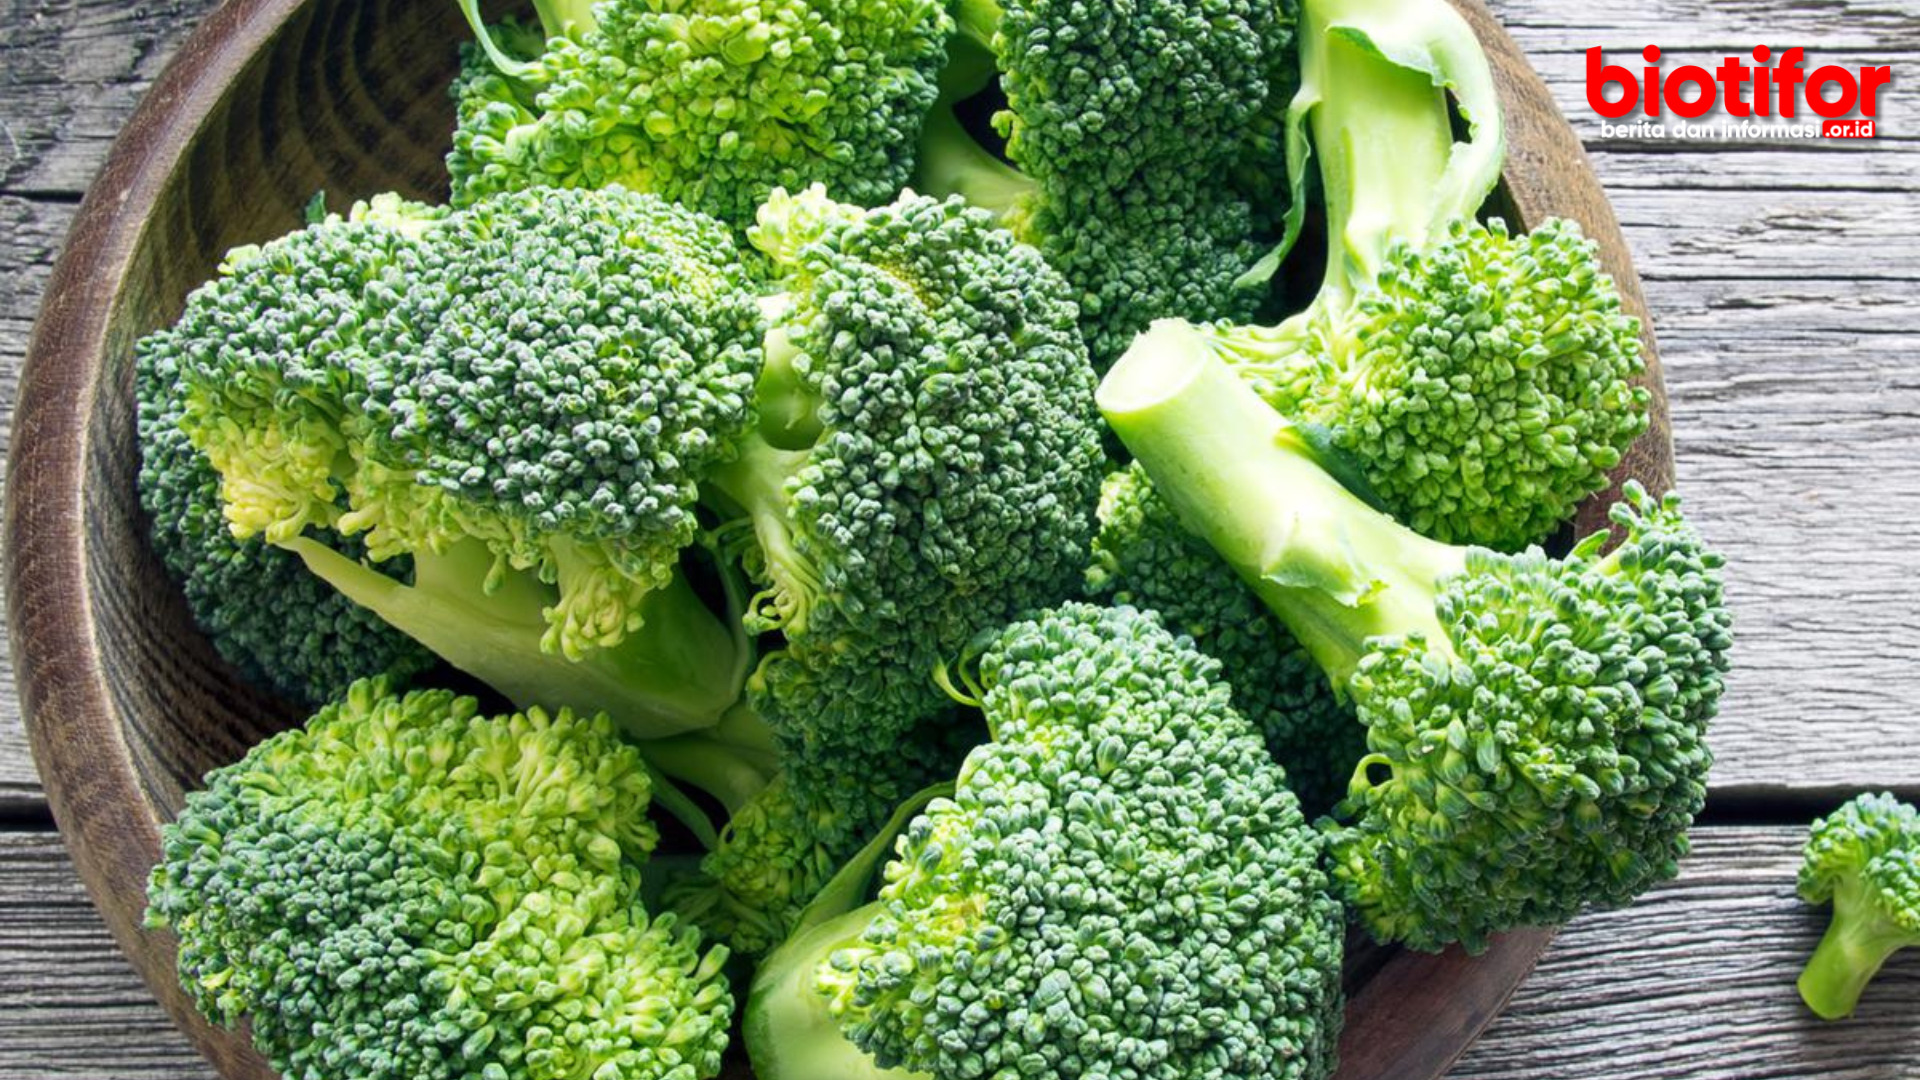 Manfaat Jus Brokoli